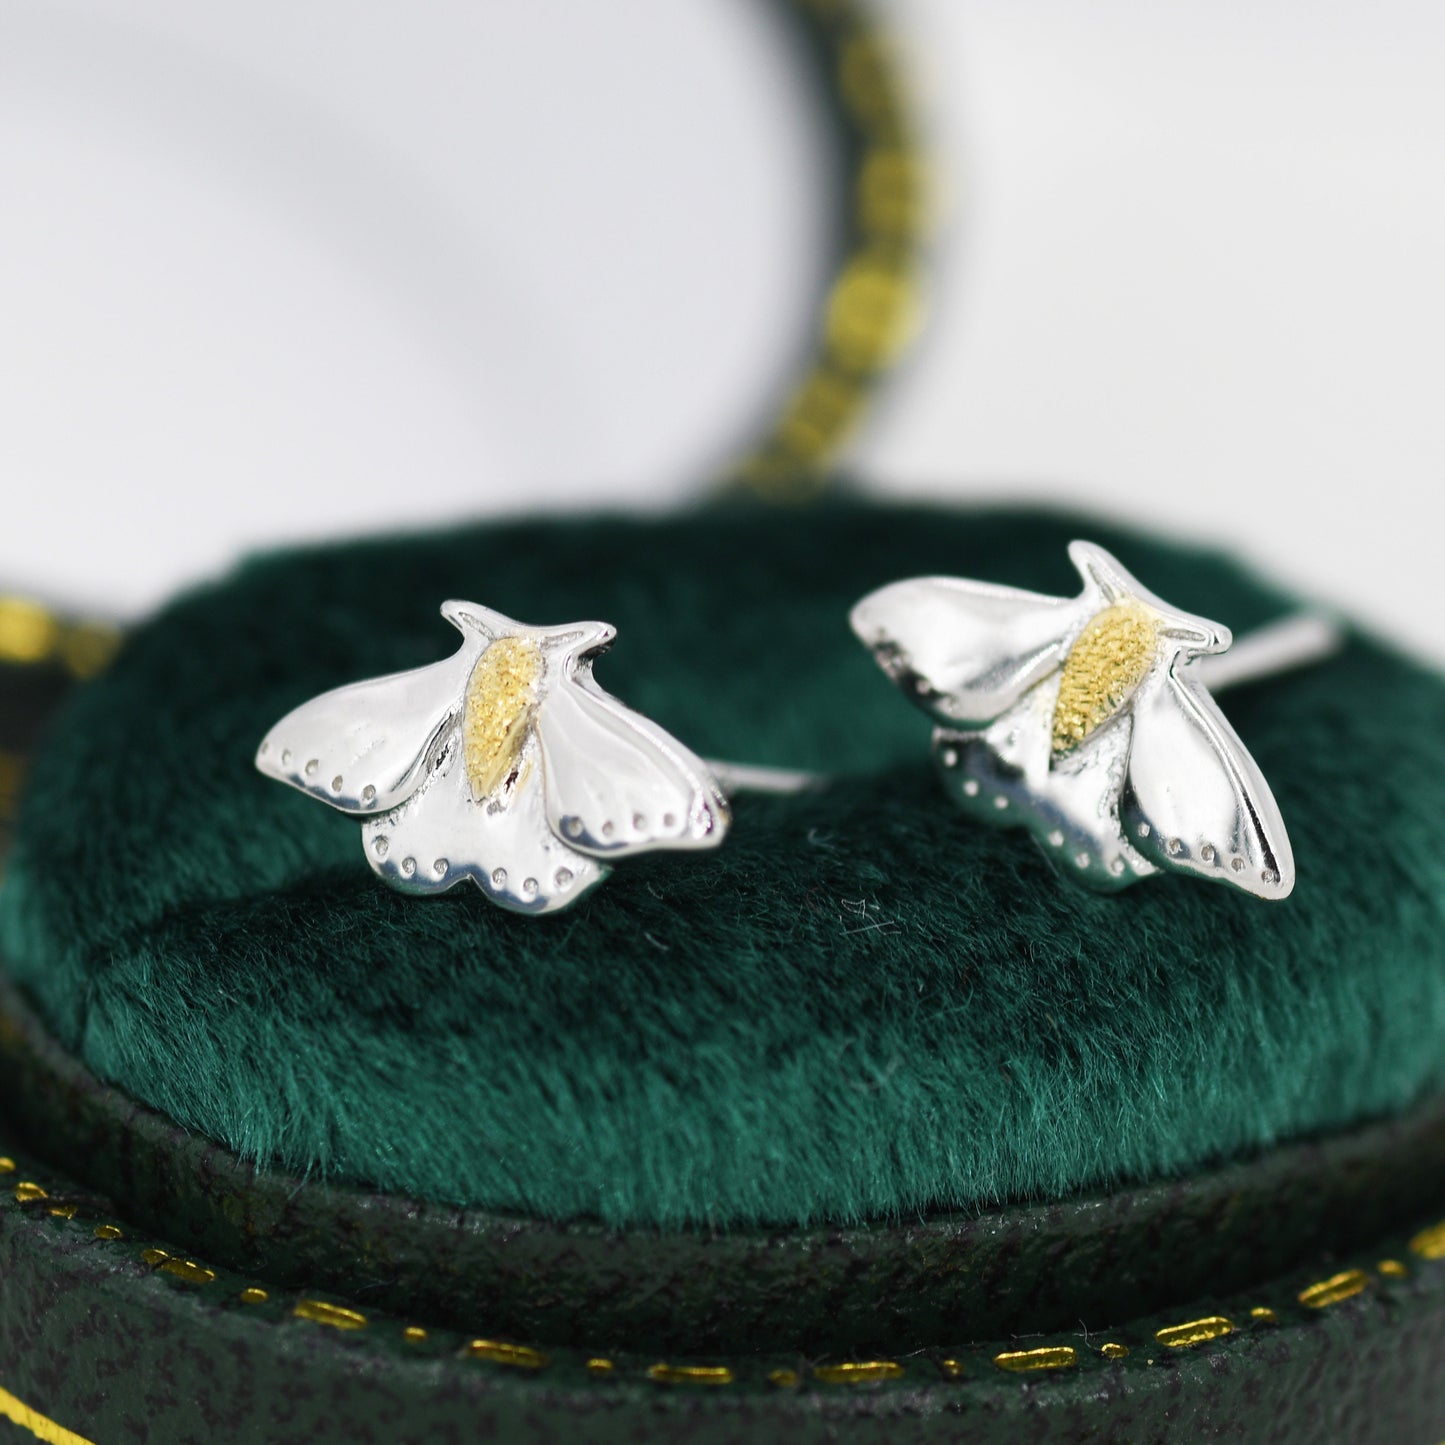 Moth Stud Earrings in Sterling Silver, Butterfly Earrings,  Insect Earrings, Nature Inspired Animal Earrings